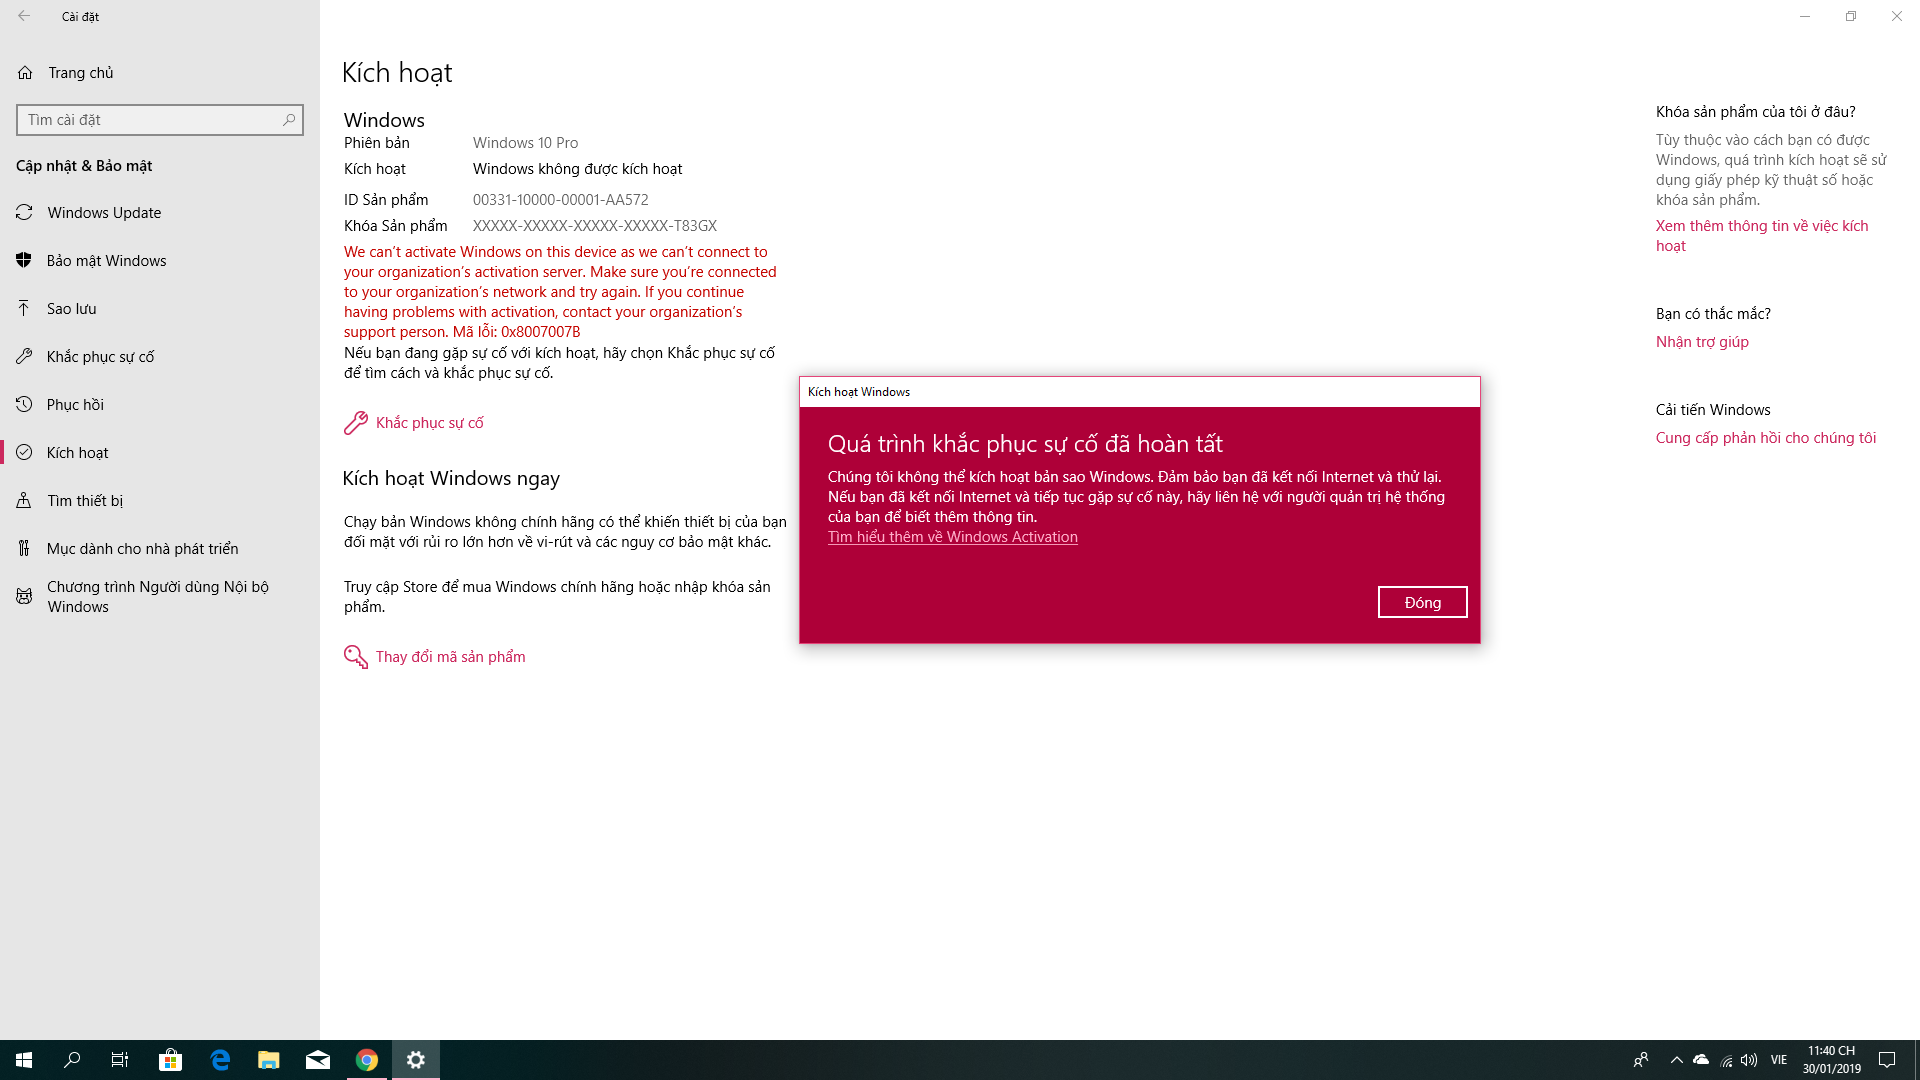 Windows 10 Pro 1809 lost activation 6f96d644-c028-4edc-a837-48e8b5ee8c54?upload=true.png